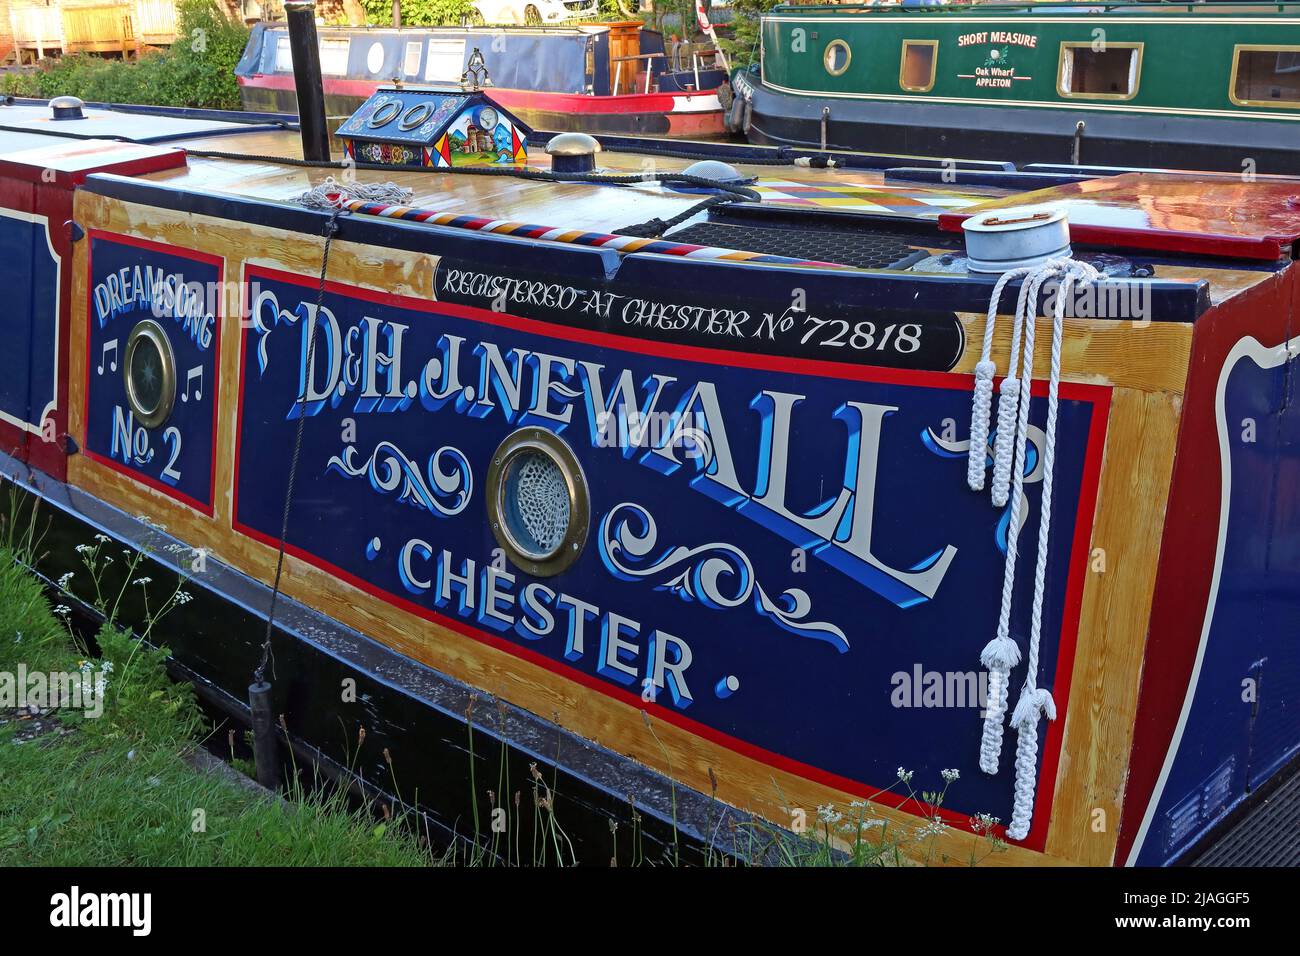 Barge du canal narrowboat amarré à Stockton Heath, Warrington, on the Bridgewater, Dreamsong NO2, 72818, DHJ Newall, Chester Banque D'Images